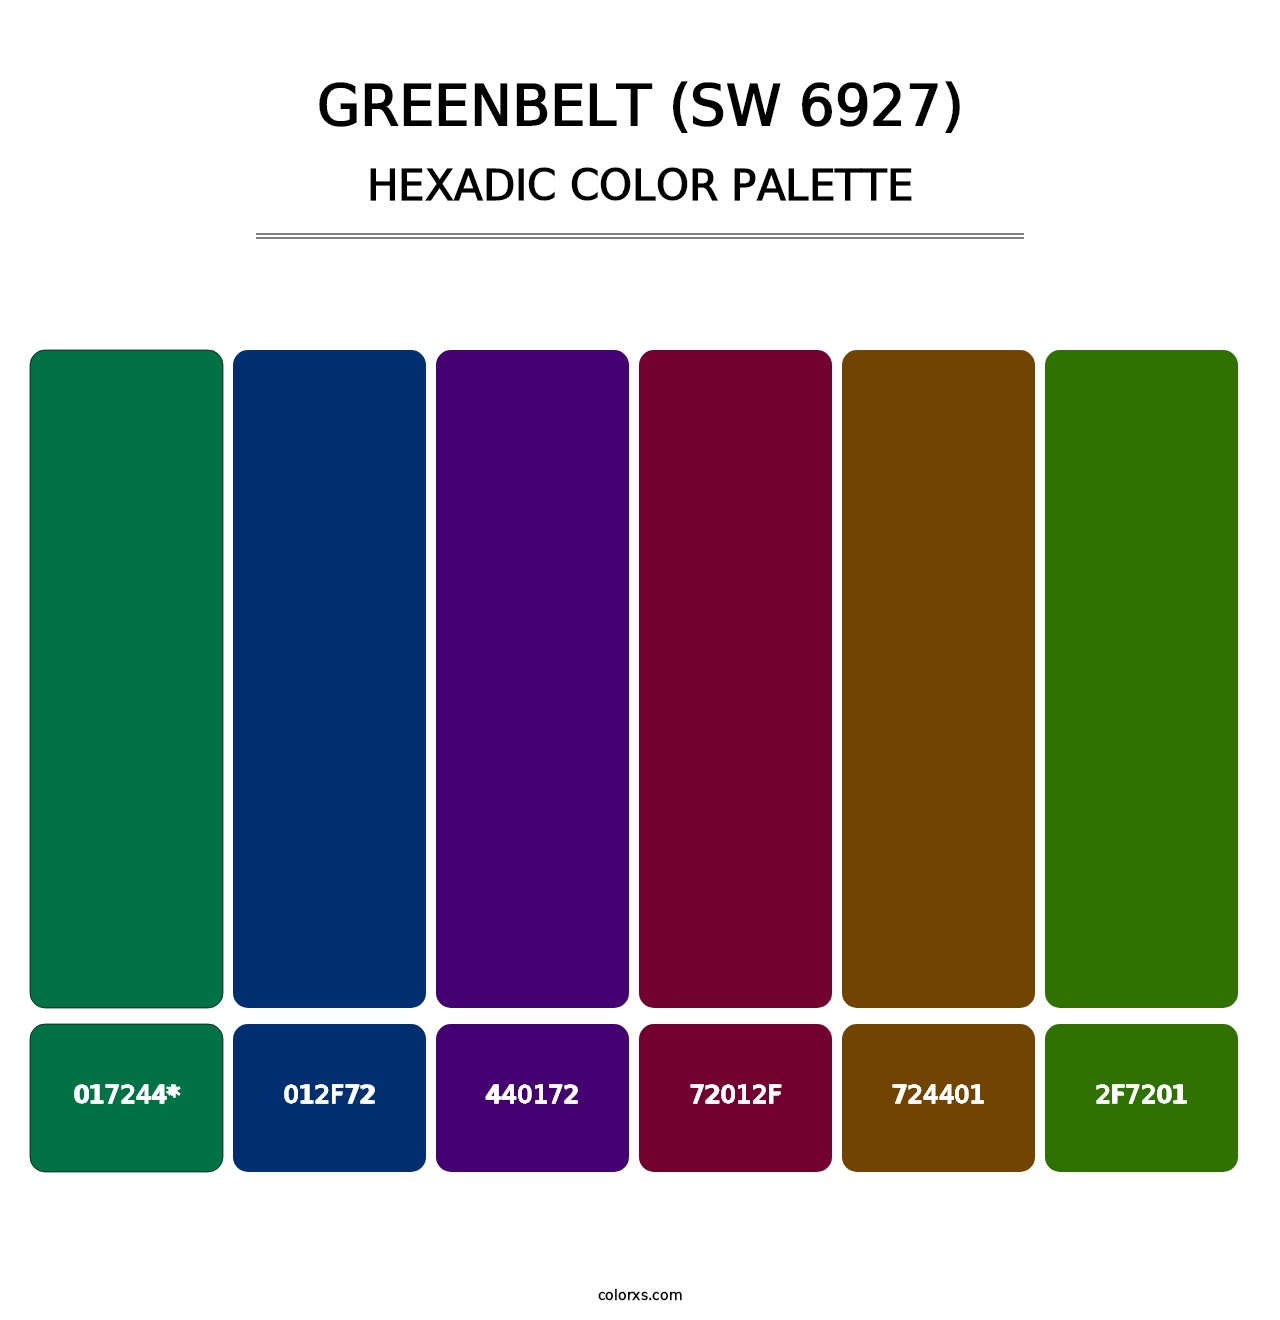 Greenbelt (SW 6927) - Hexadic Color Palette